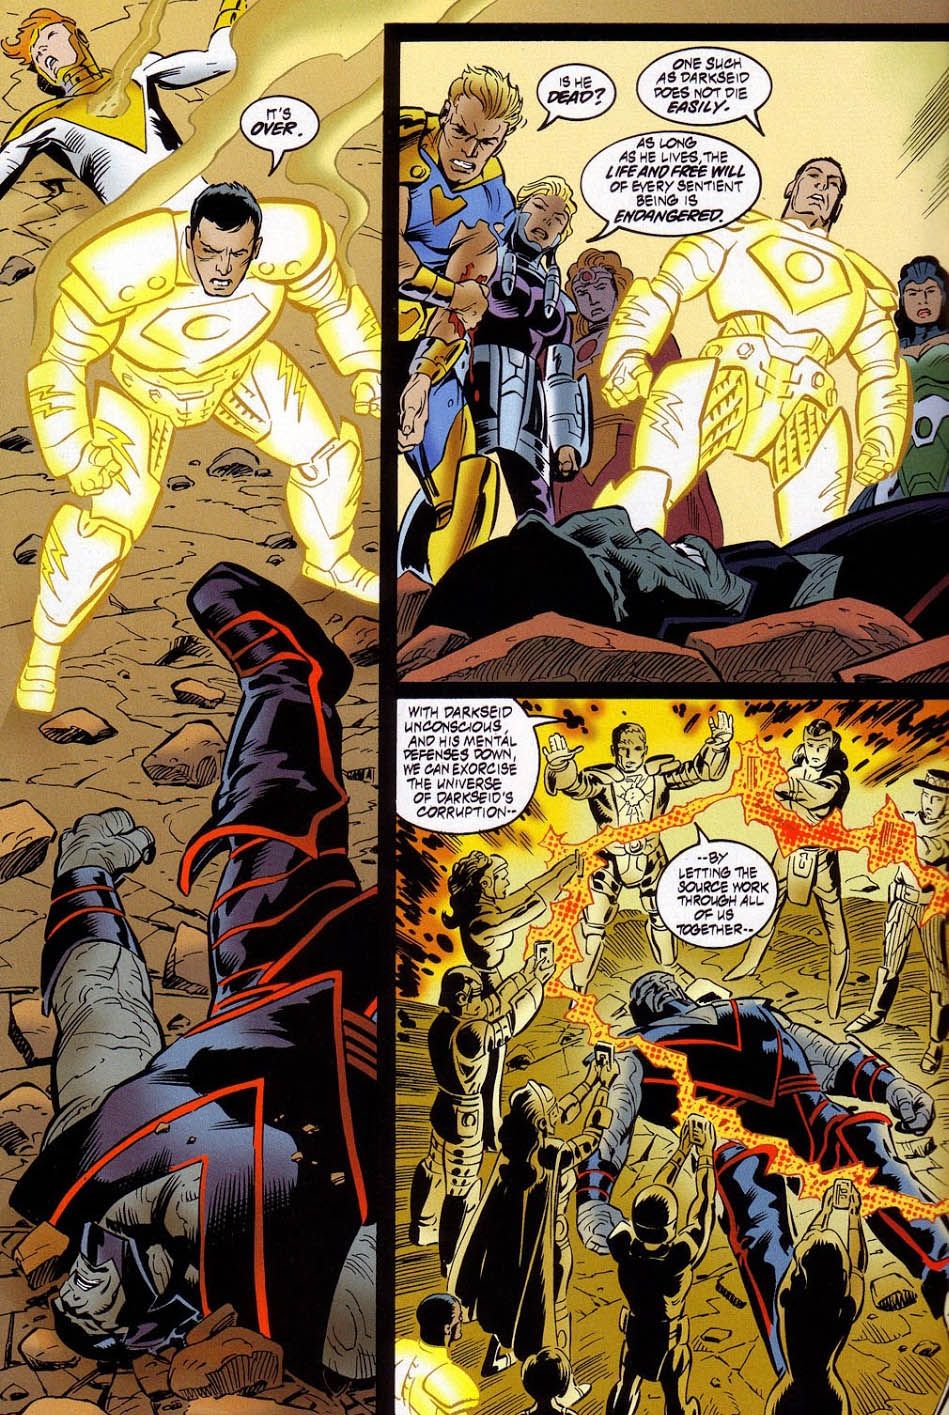 Superman: The Dark Side #3 panel